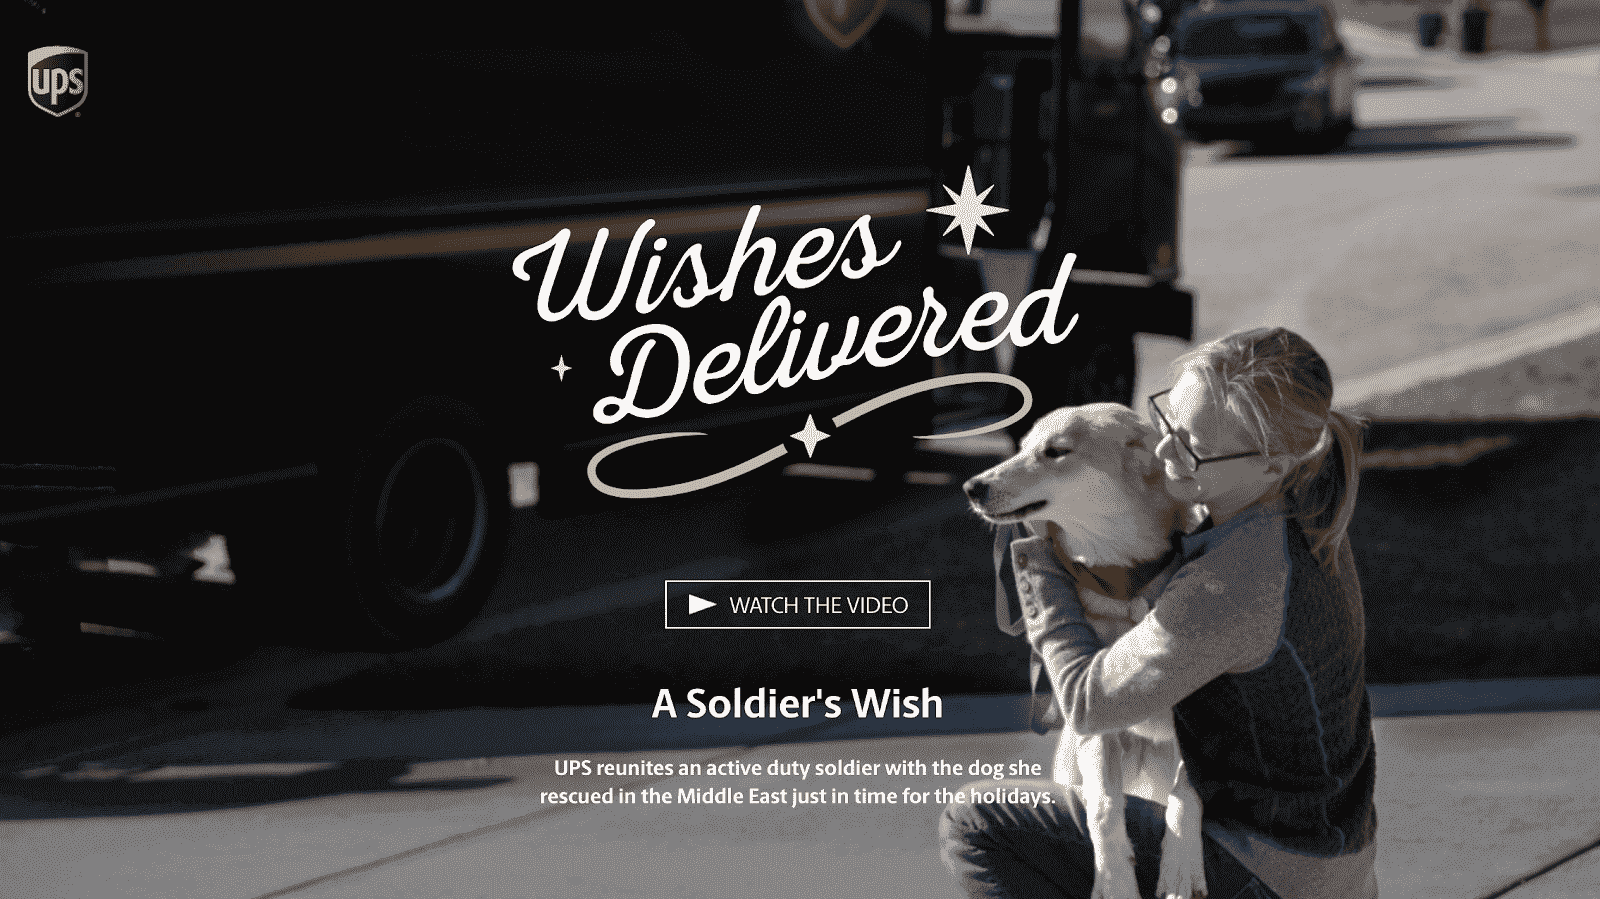 UPS - Wishes Delivered